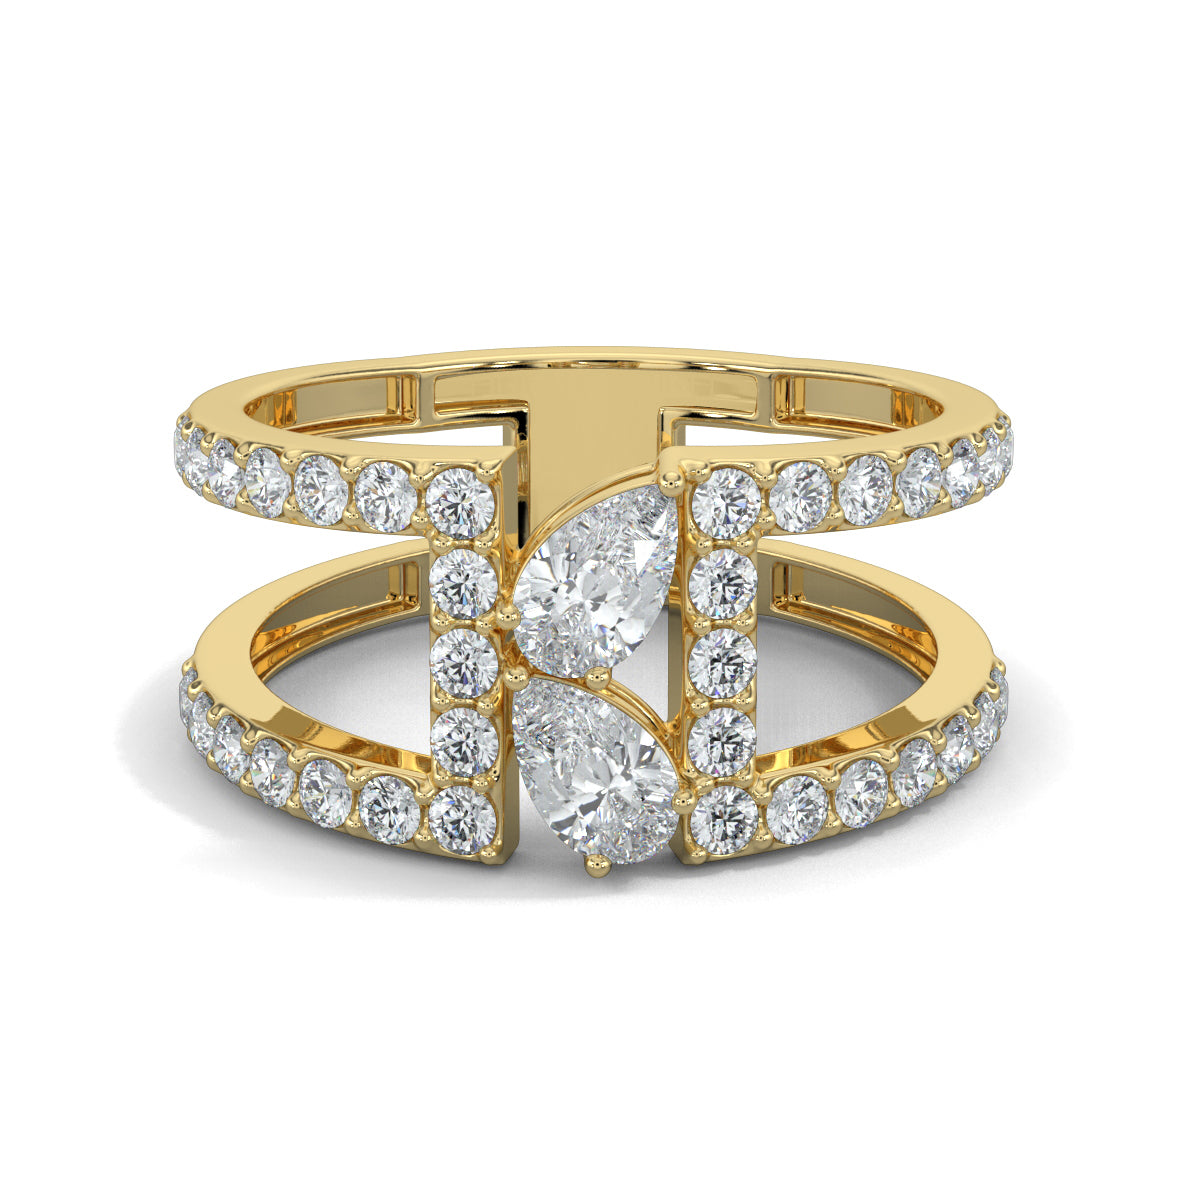 Yellow Gold, Diamond Ring, Natural diamond duet ring, Lab-grown diamond duet ring, everyday diamond band, pave set diamond stack ring, pear diamond accent, elegant jewelry accessory